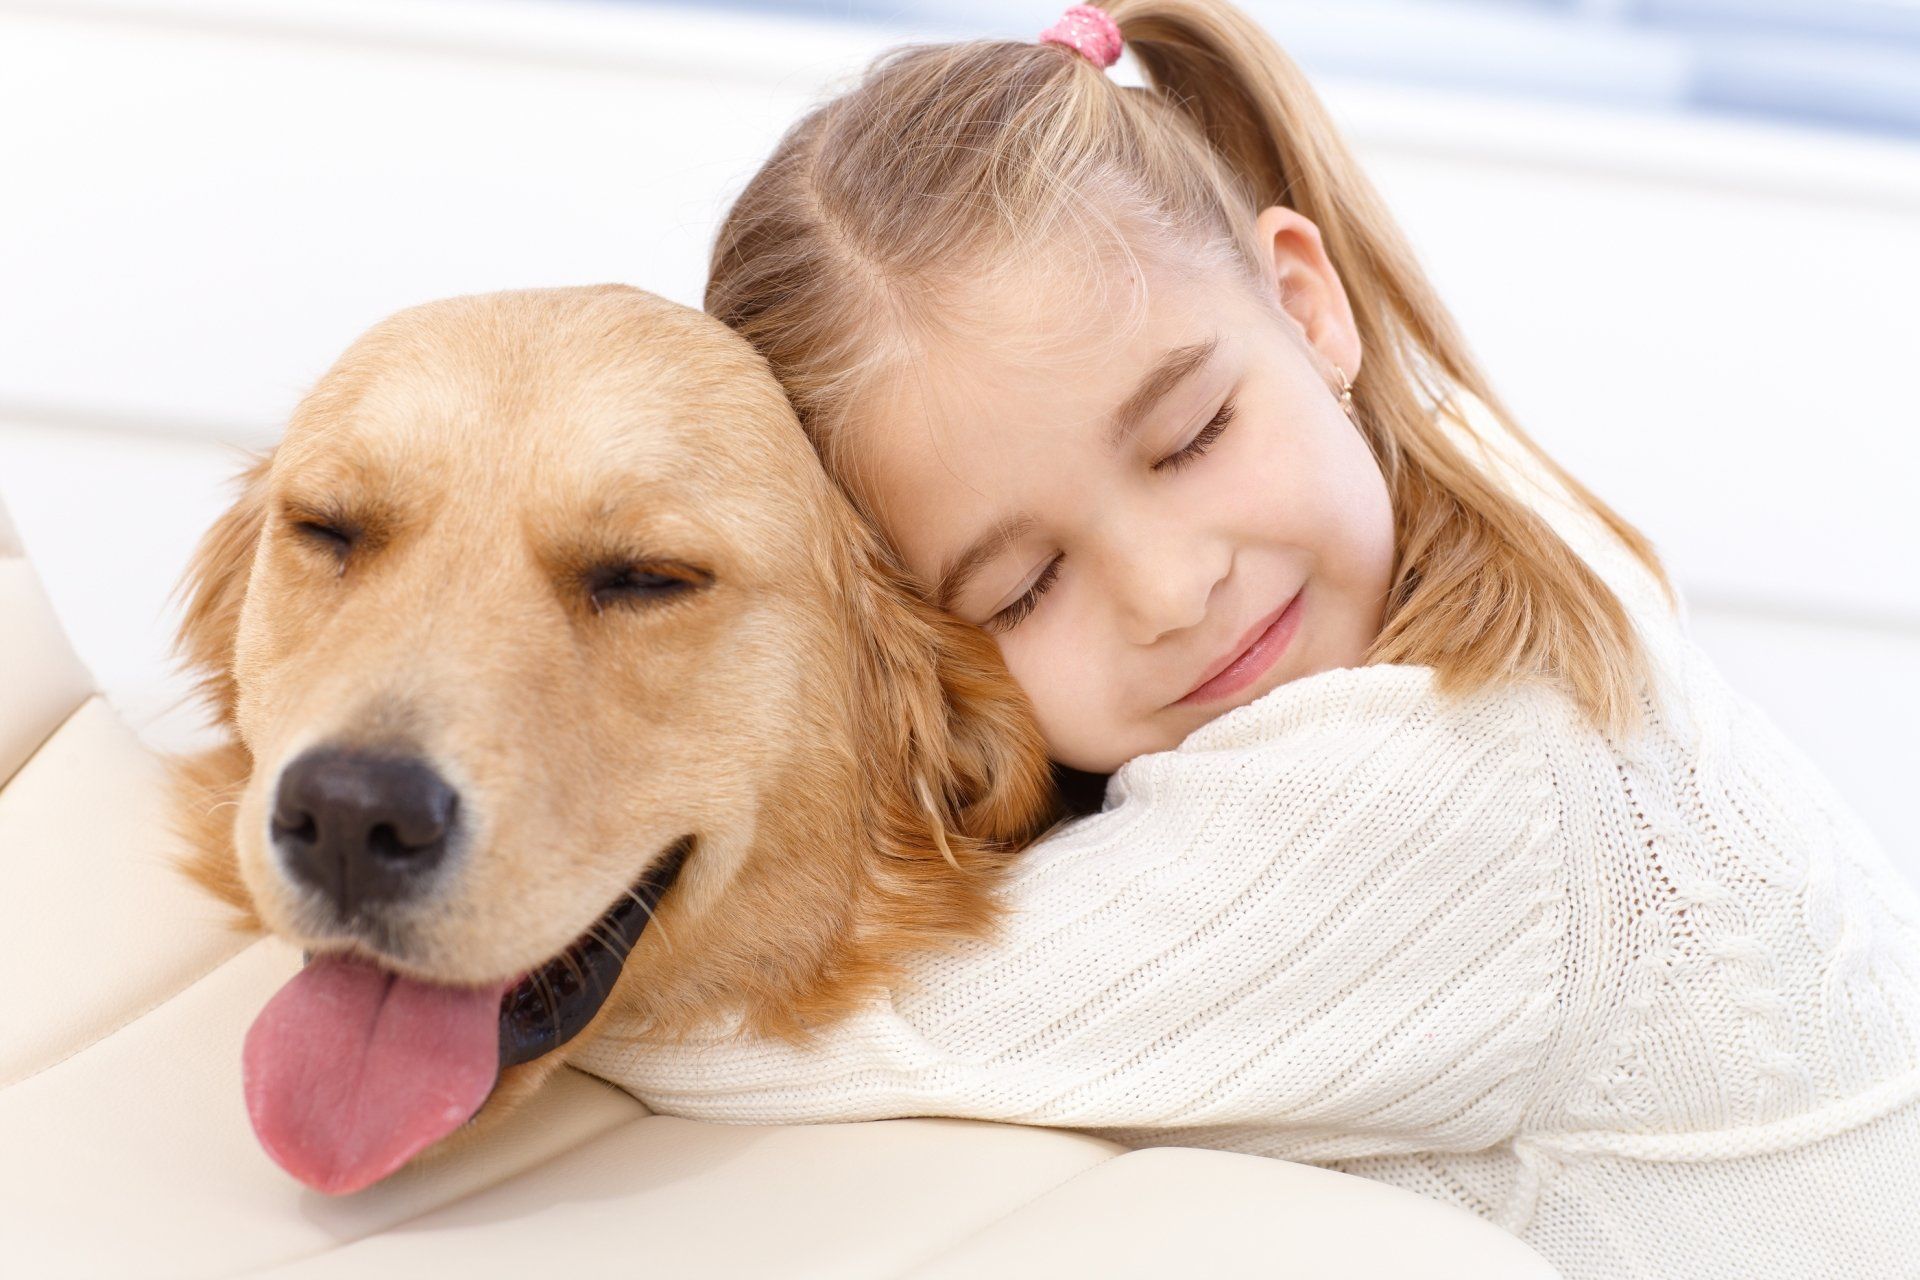 Young Girl cuddles her beloved dog